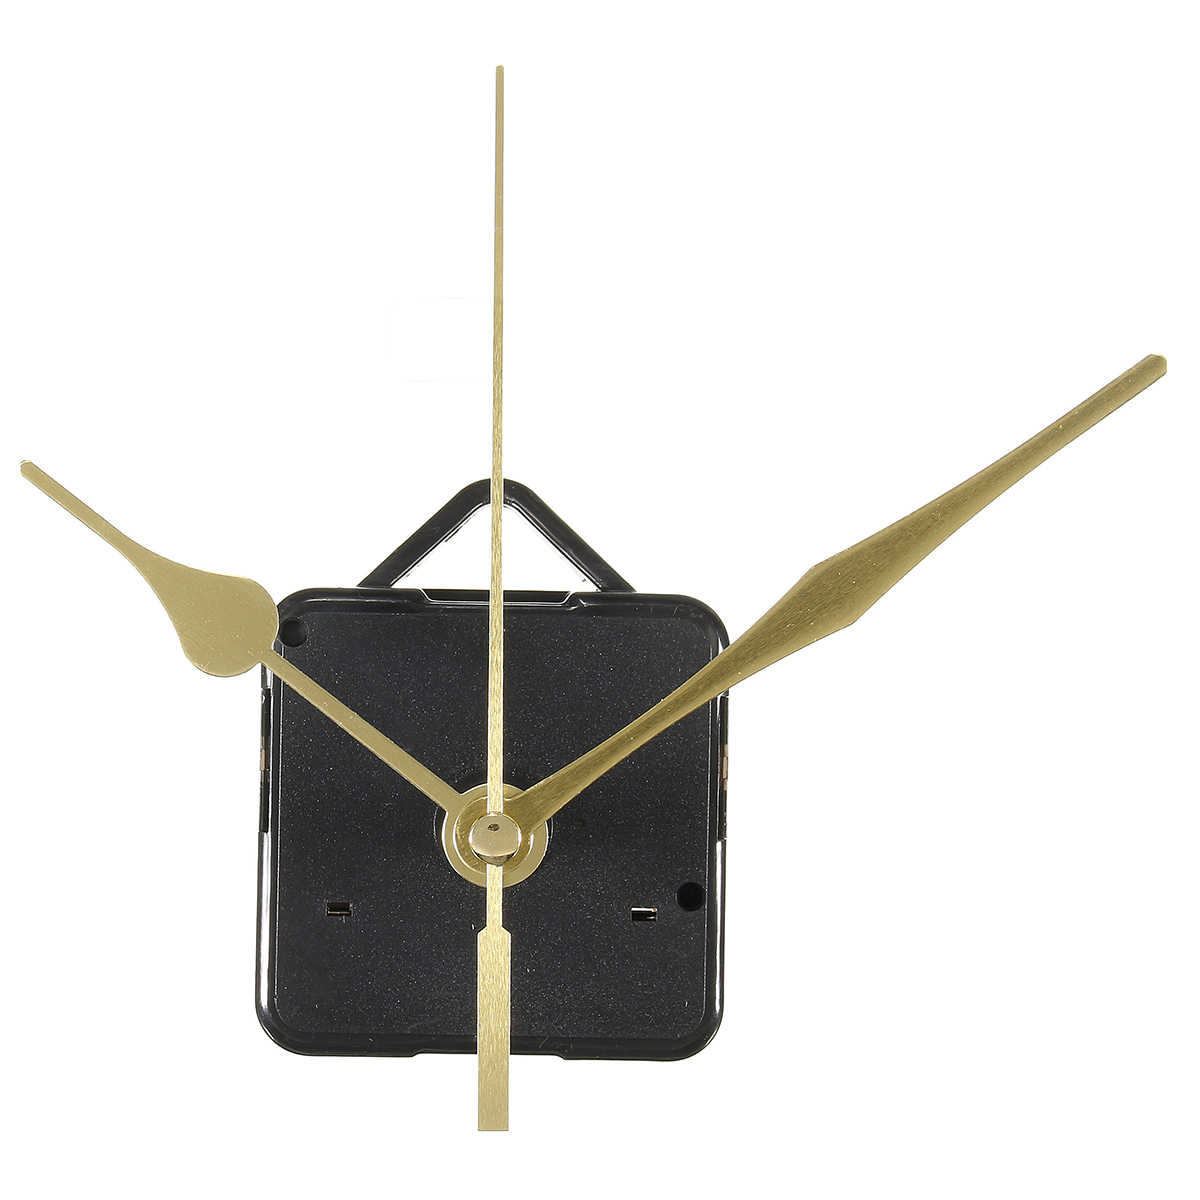 Quartz-Clock-Movement-Mechanism-Gold-Hands-DIY-Repair-Parts-Tool-Kit-Home-Office-1634169-1